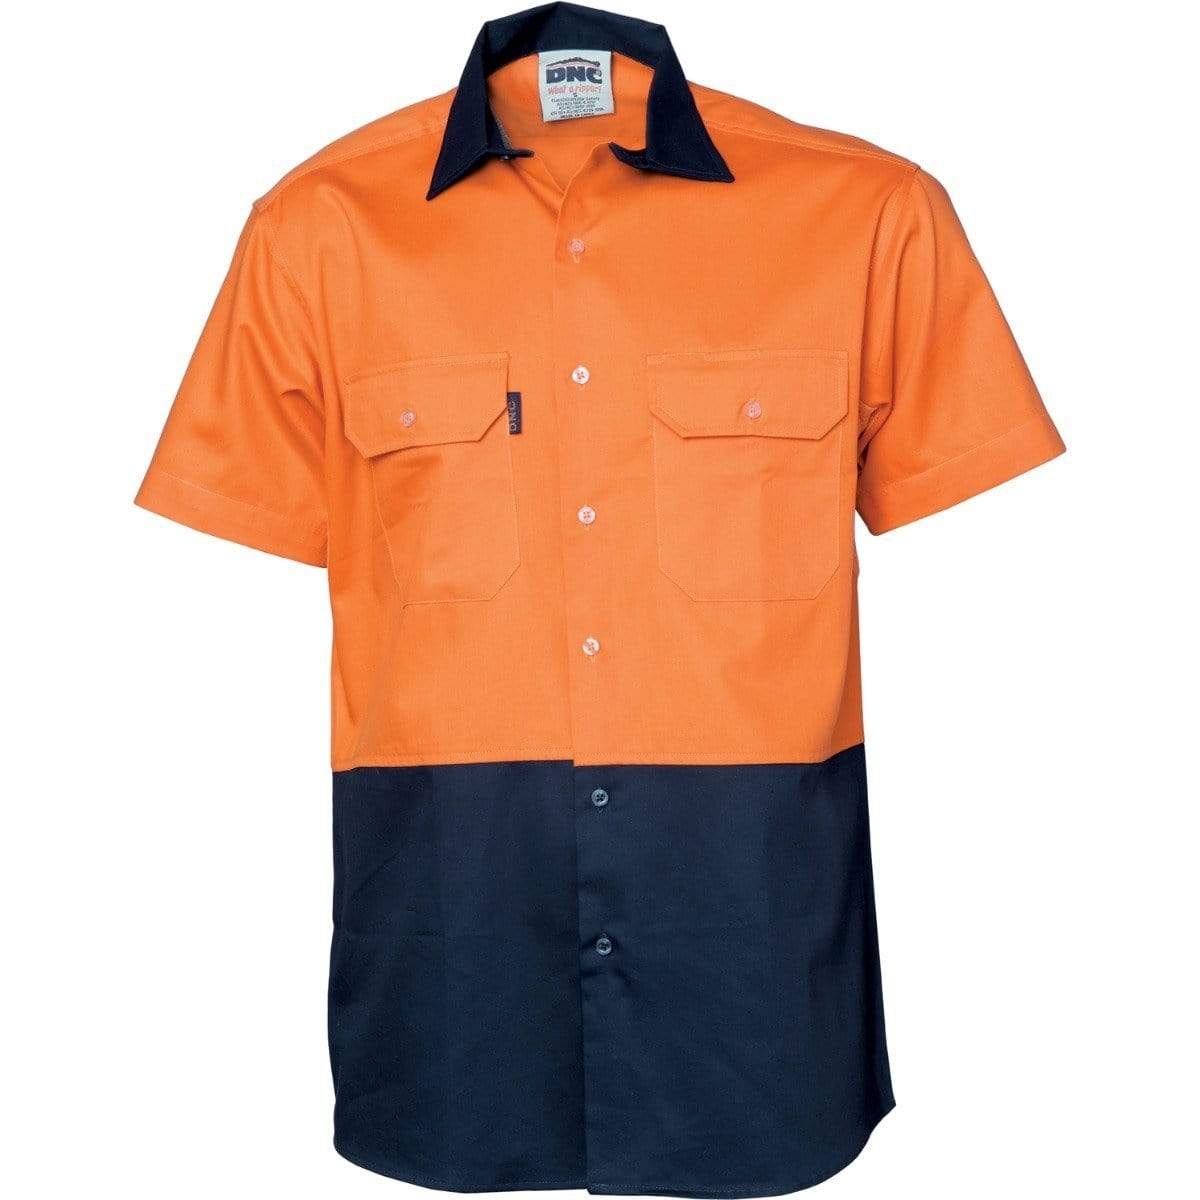 Dnc Workwear Hi-vis Two Tone Cotton Drill Vented Short Sleeve Shirt - 3980 Work Wear DNC Workwear Orange/Navy XS 